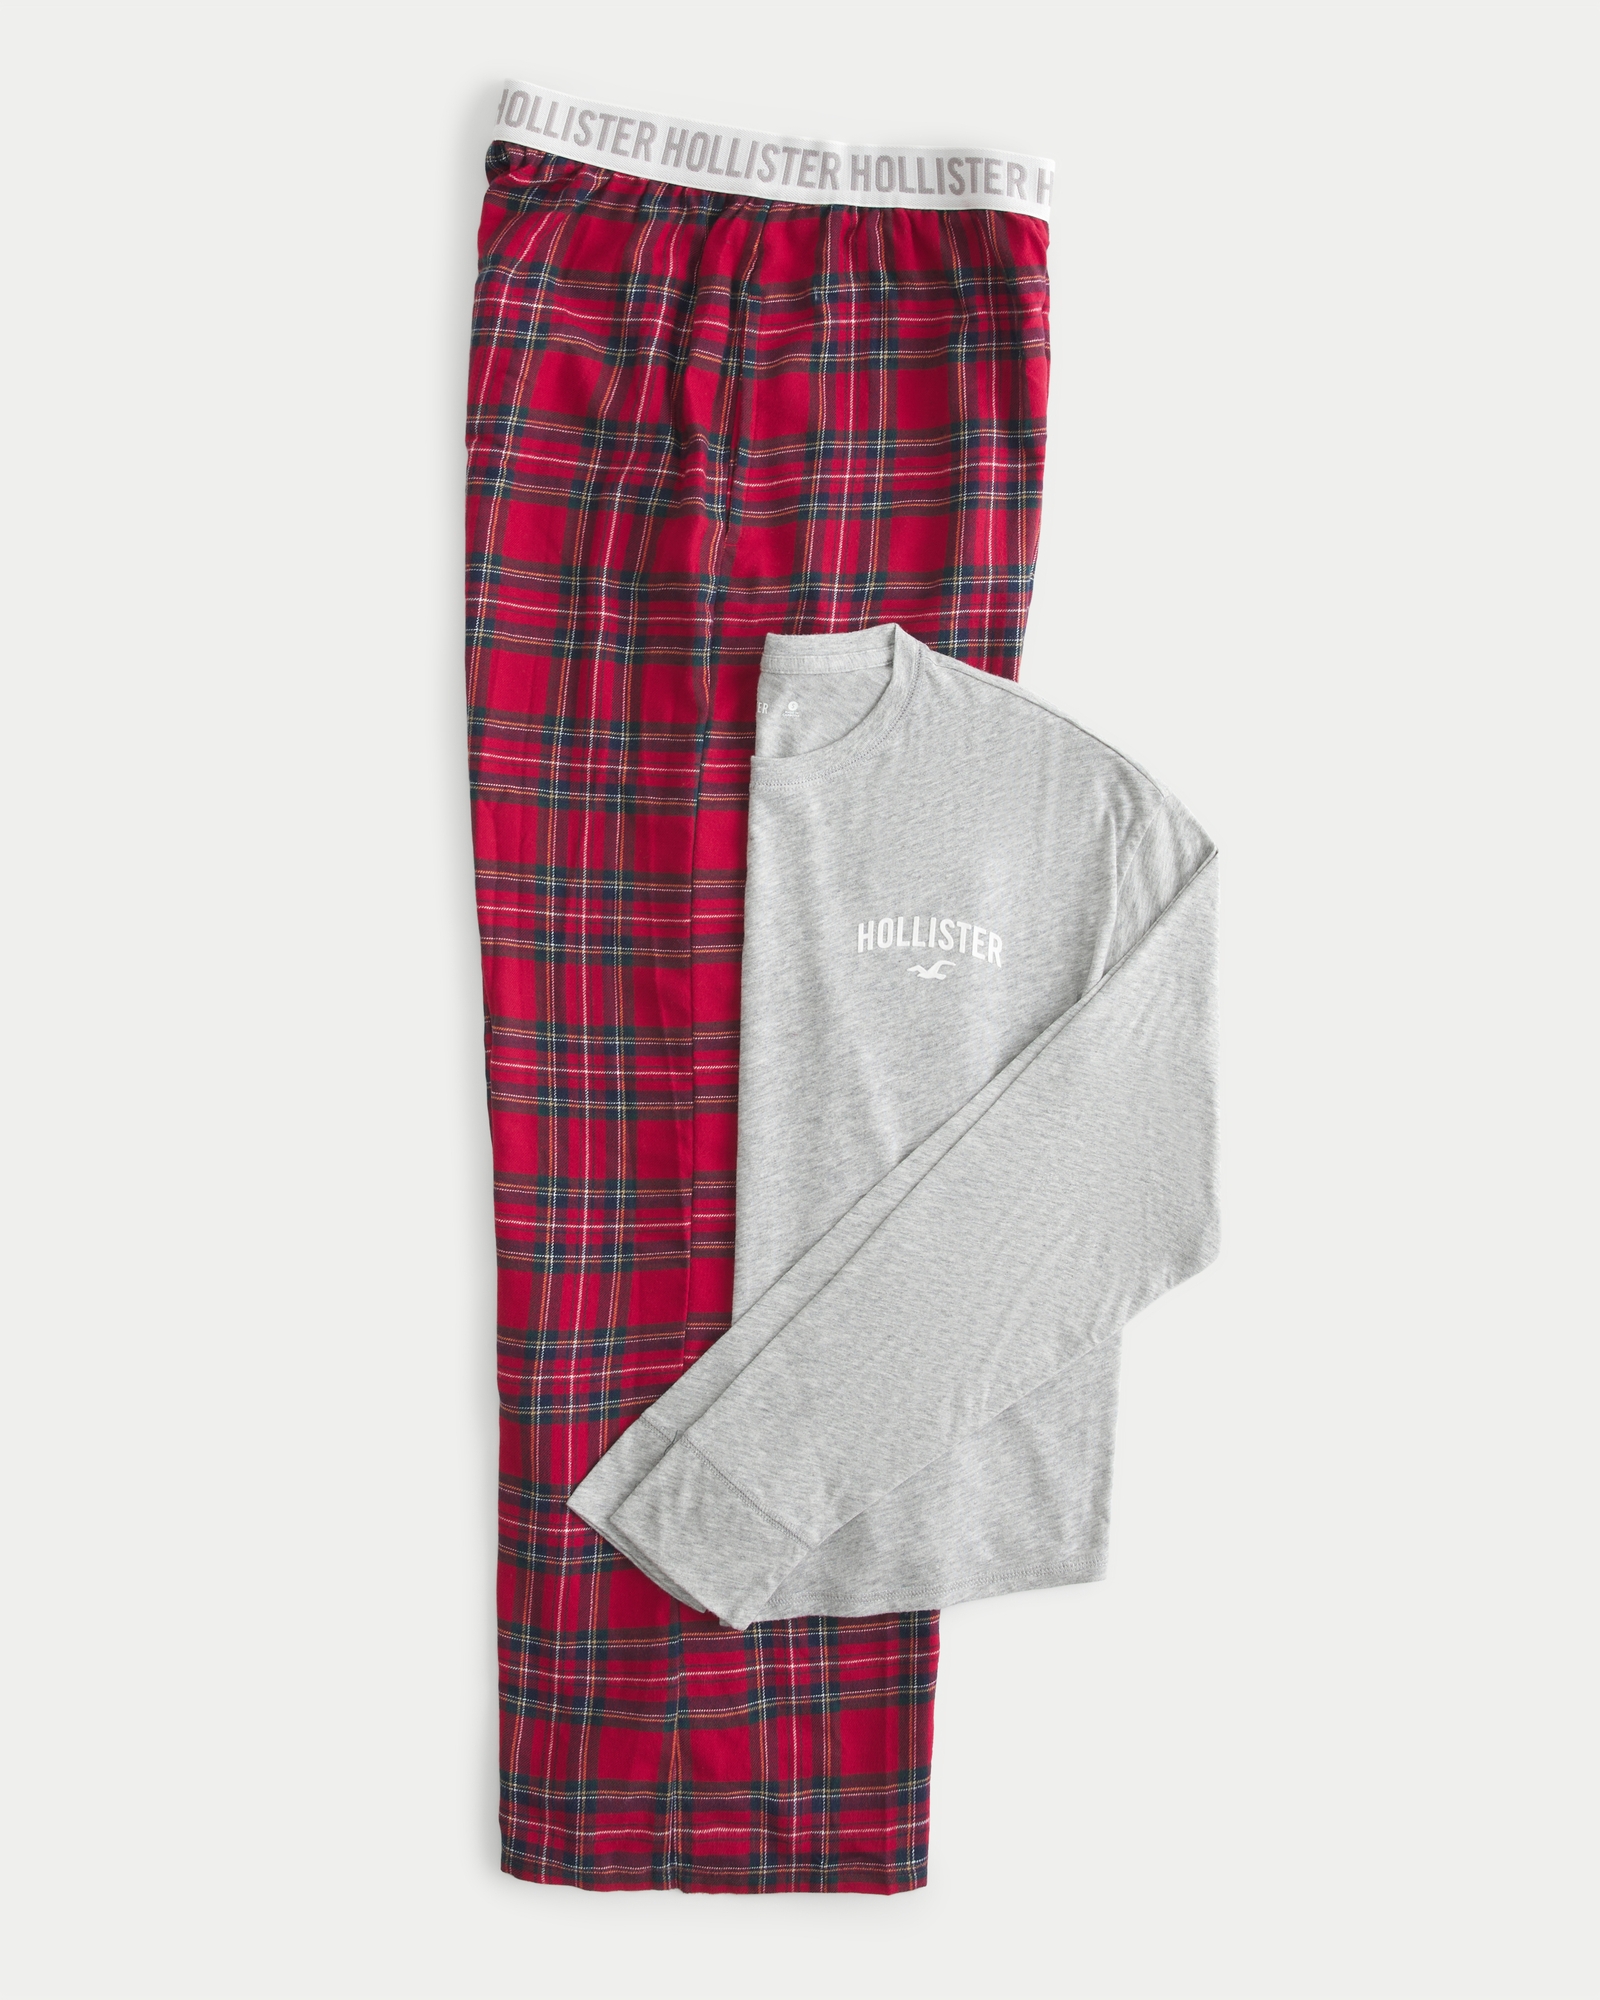 Women sleep bottoms ladies pajama pants pyjama trousers women's drawstring  plaid cotton loose sle